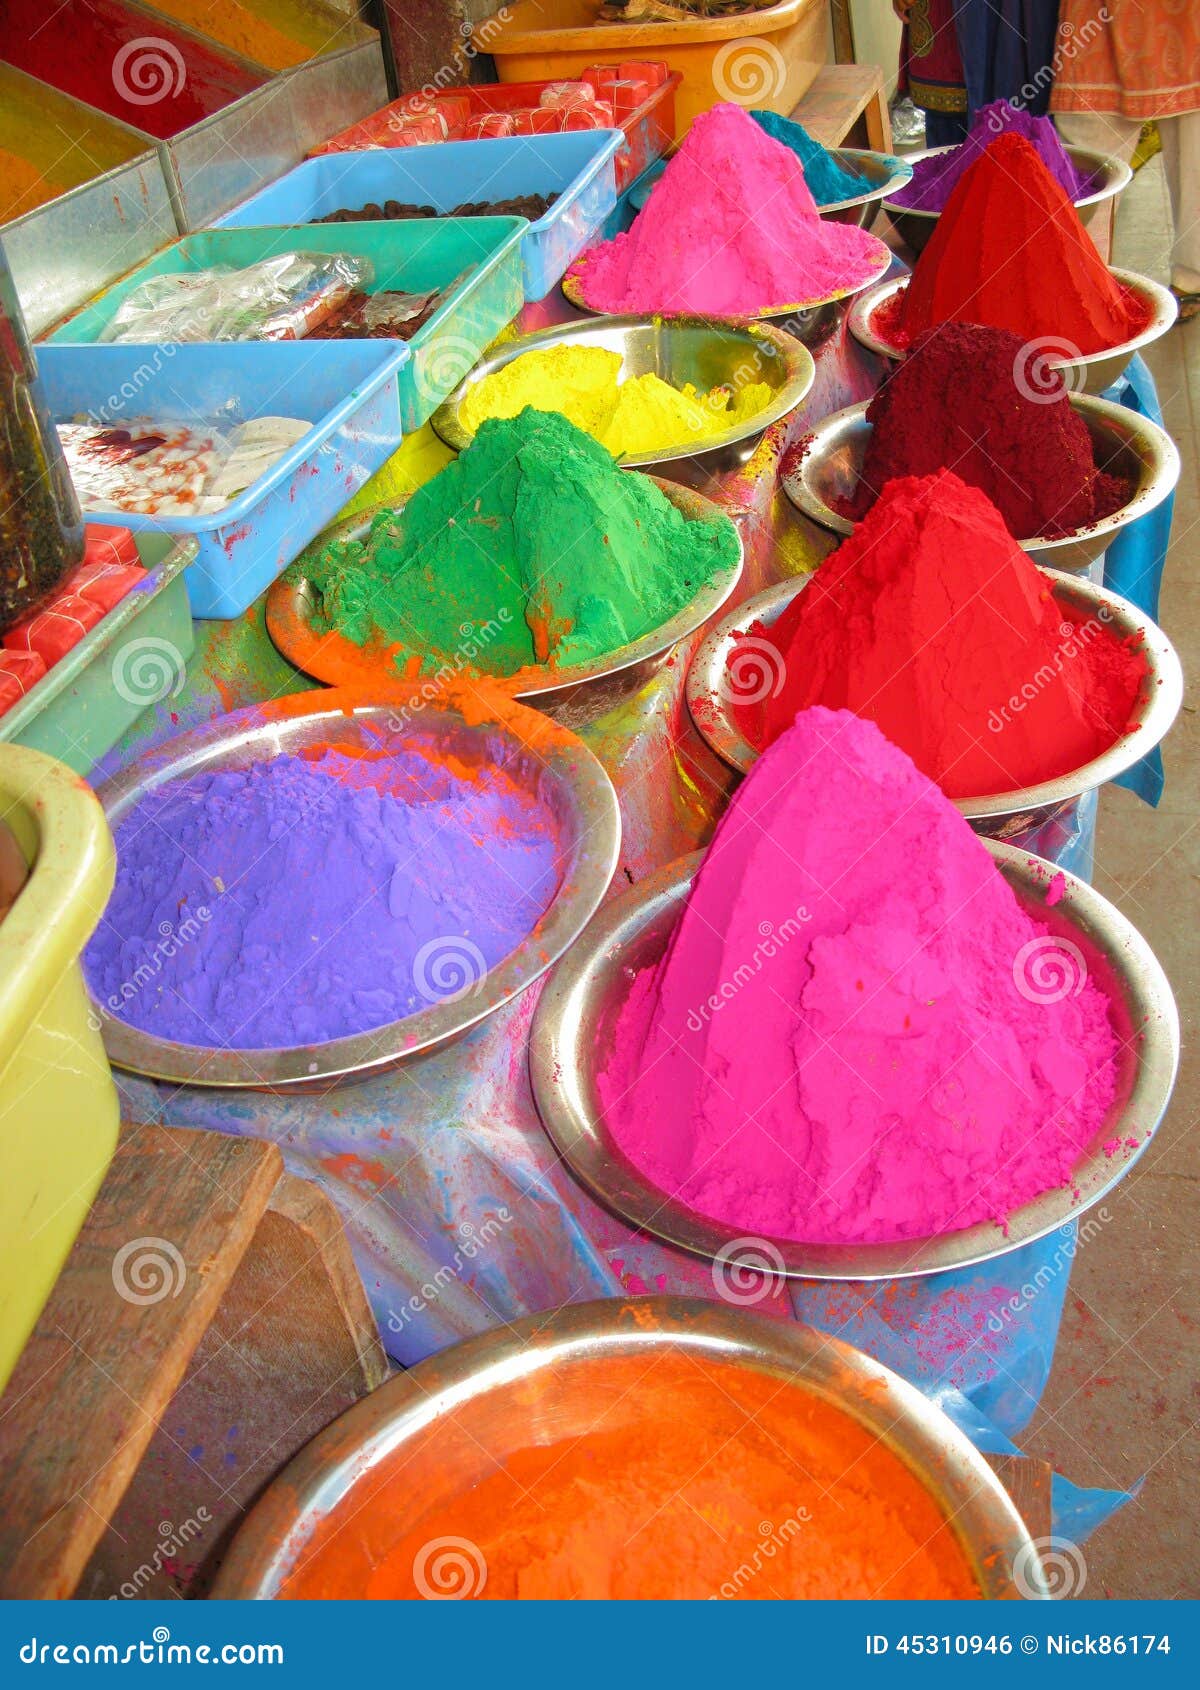 bindi dyes in an indian market